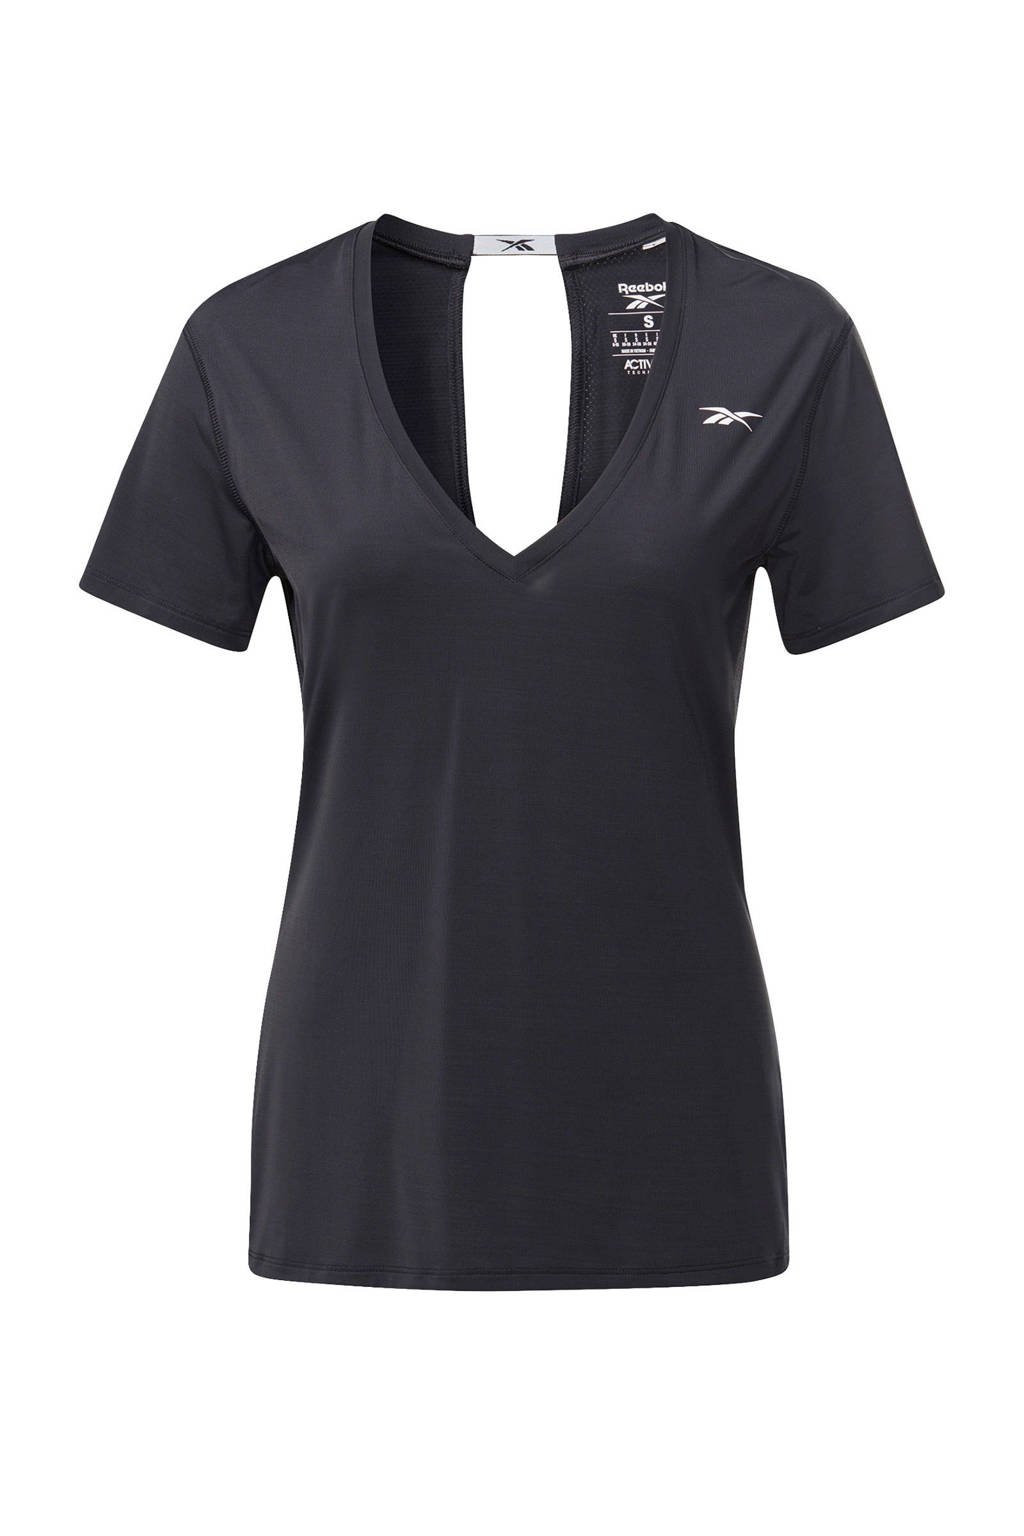 Zwarte dames Reebok Training sport T-shirt van nylon met logo dessin, korte mouwen en V-hals